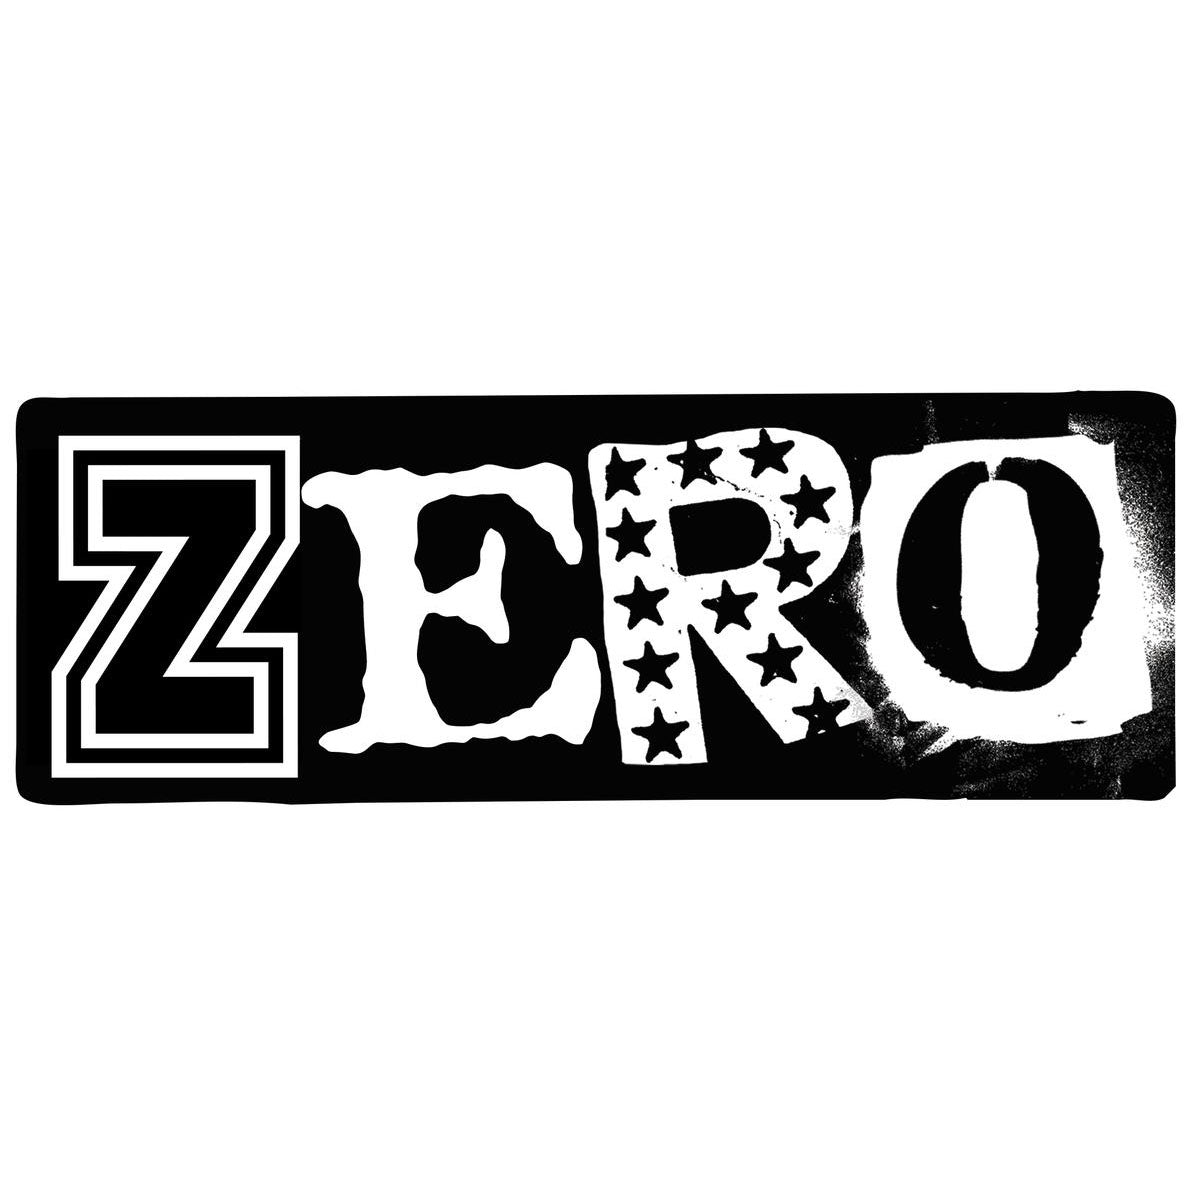 Zero Legacy Ransom Sticker